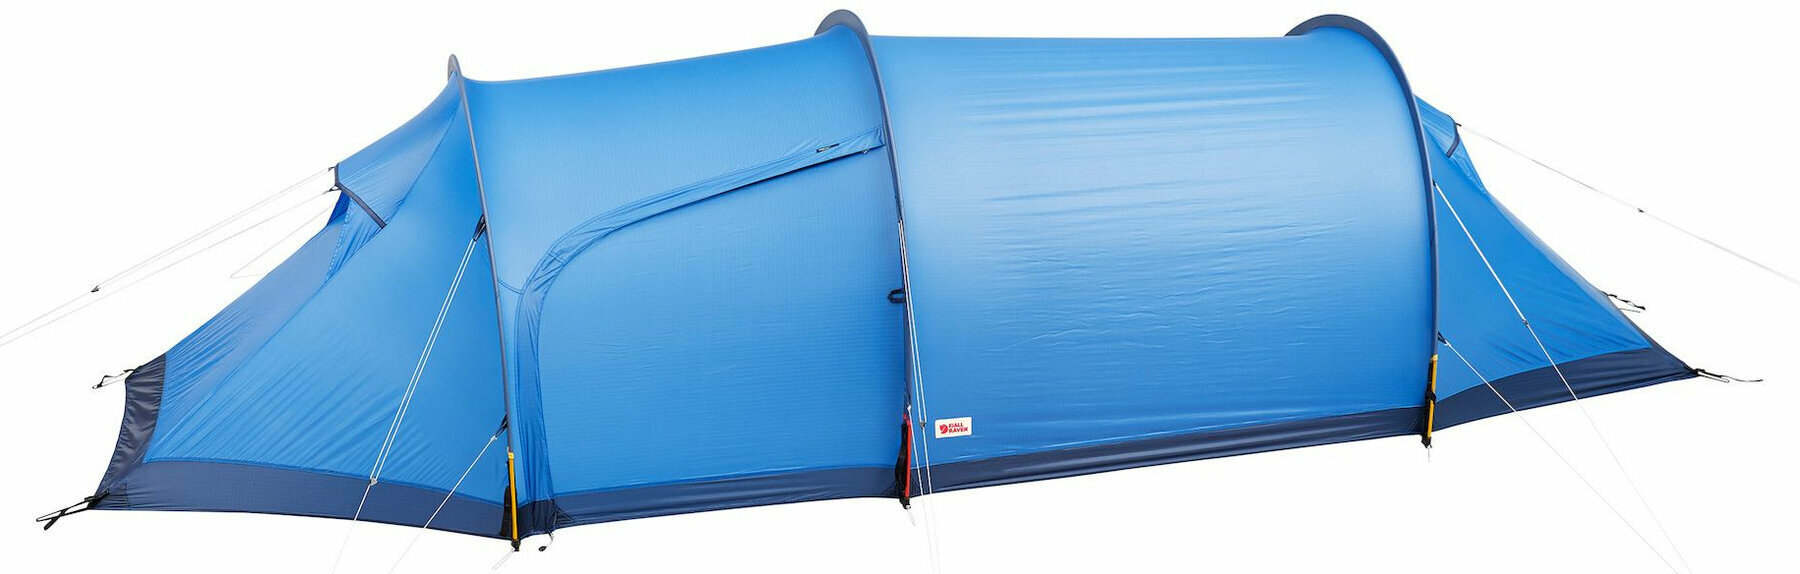 Tent Fjällräven Abisko Endurance 2 UN Blue Tent